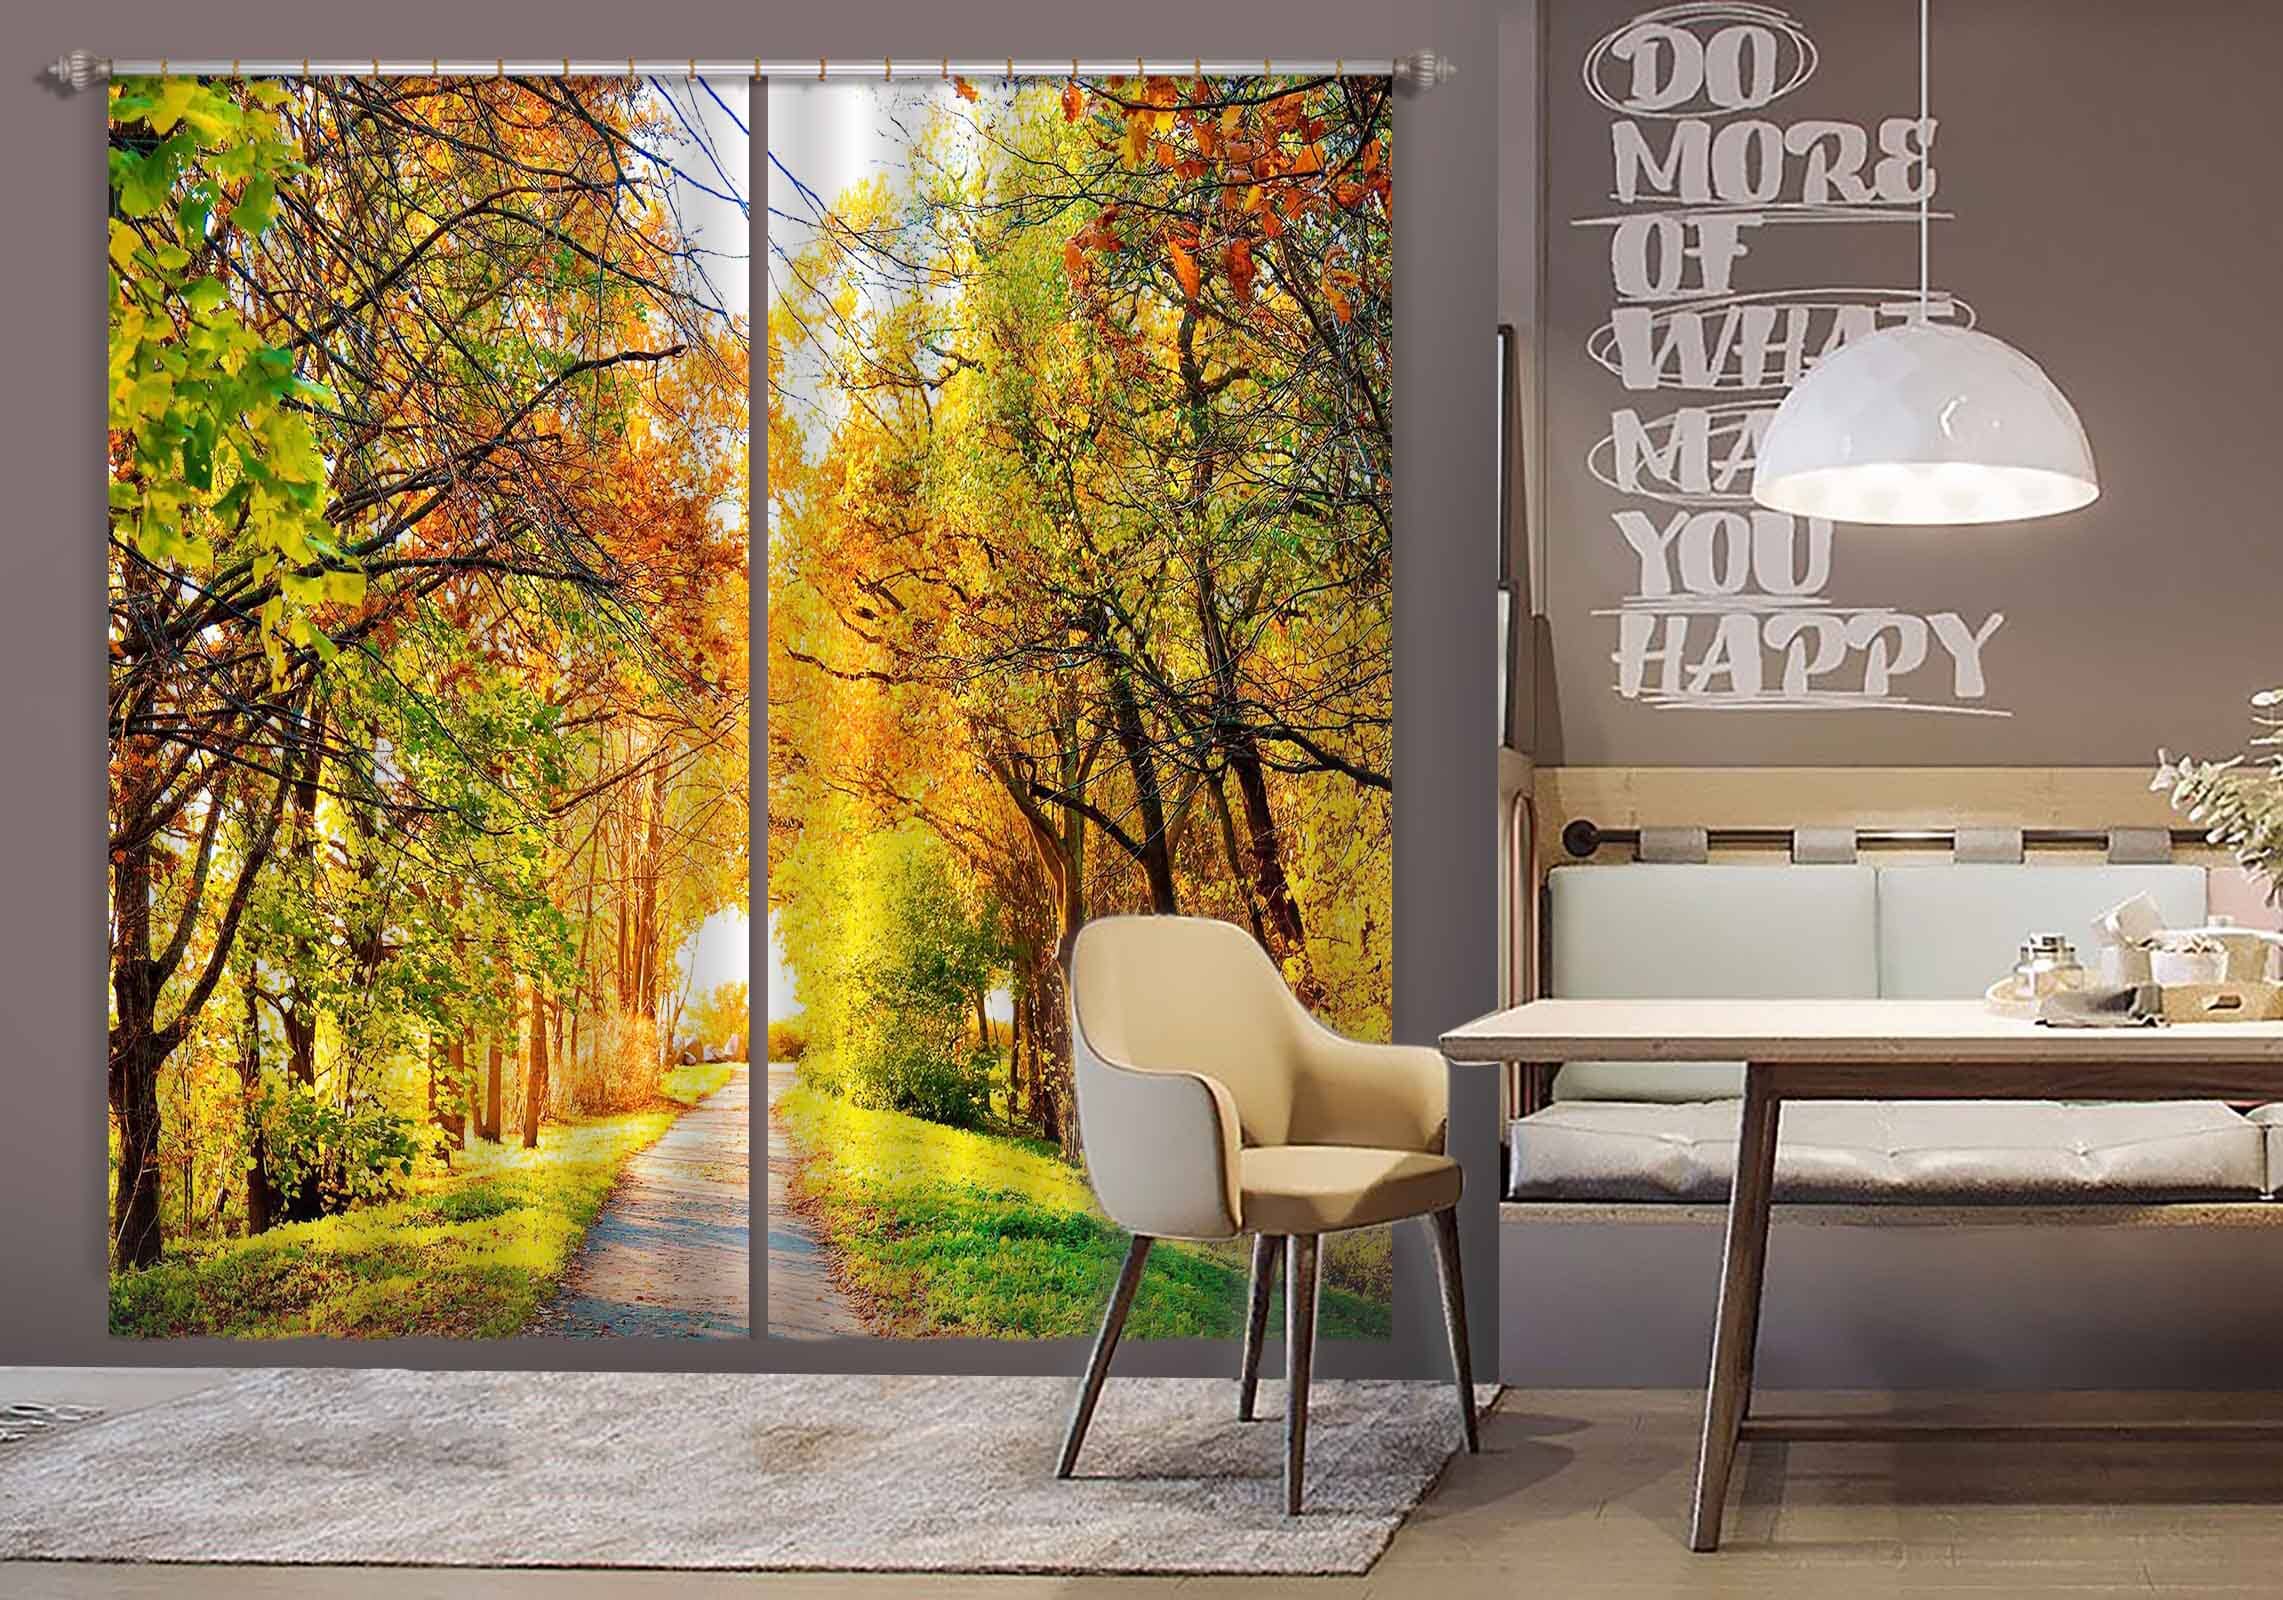 3D Sunny Forest 125 Curtains Drapes Wallpaper AJ Wallpaper 